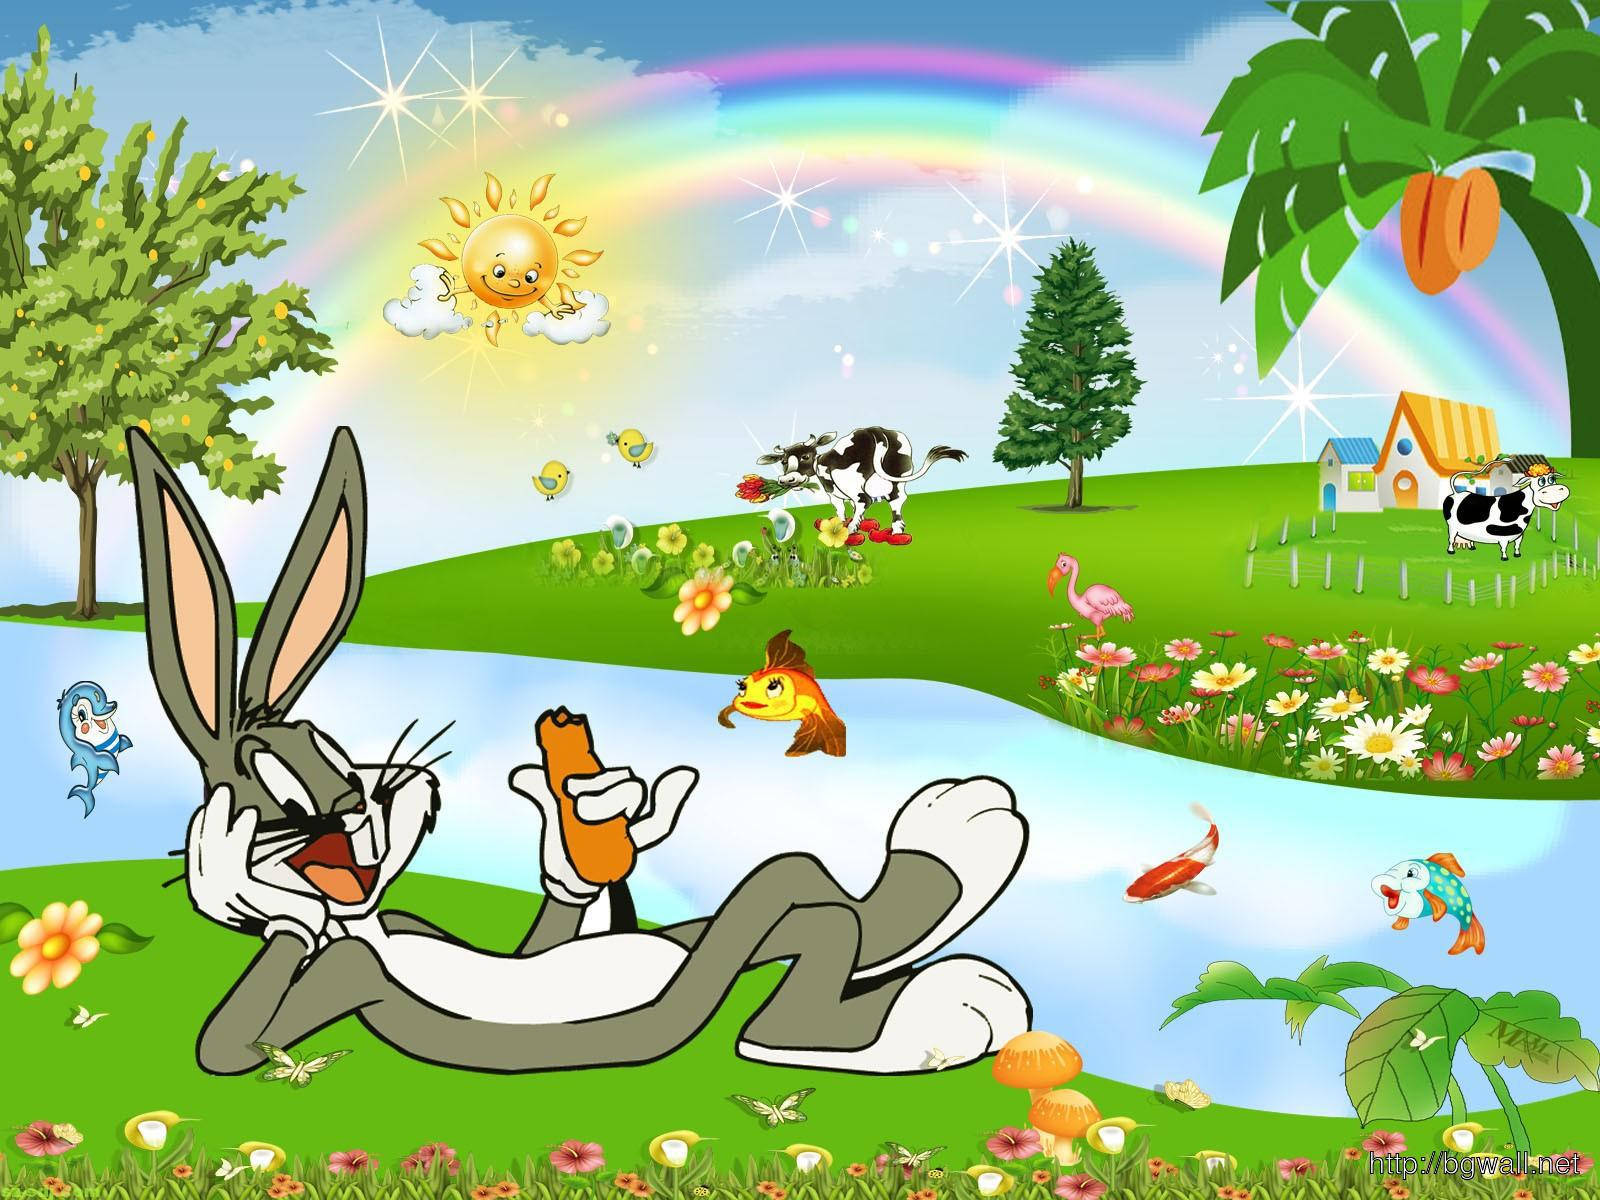 Bugs Bunny Cartoon Character